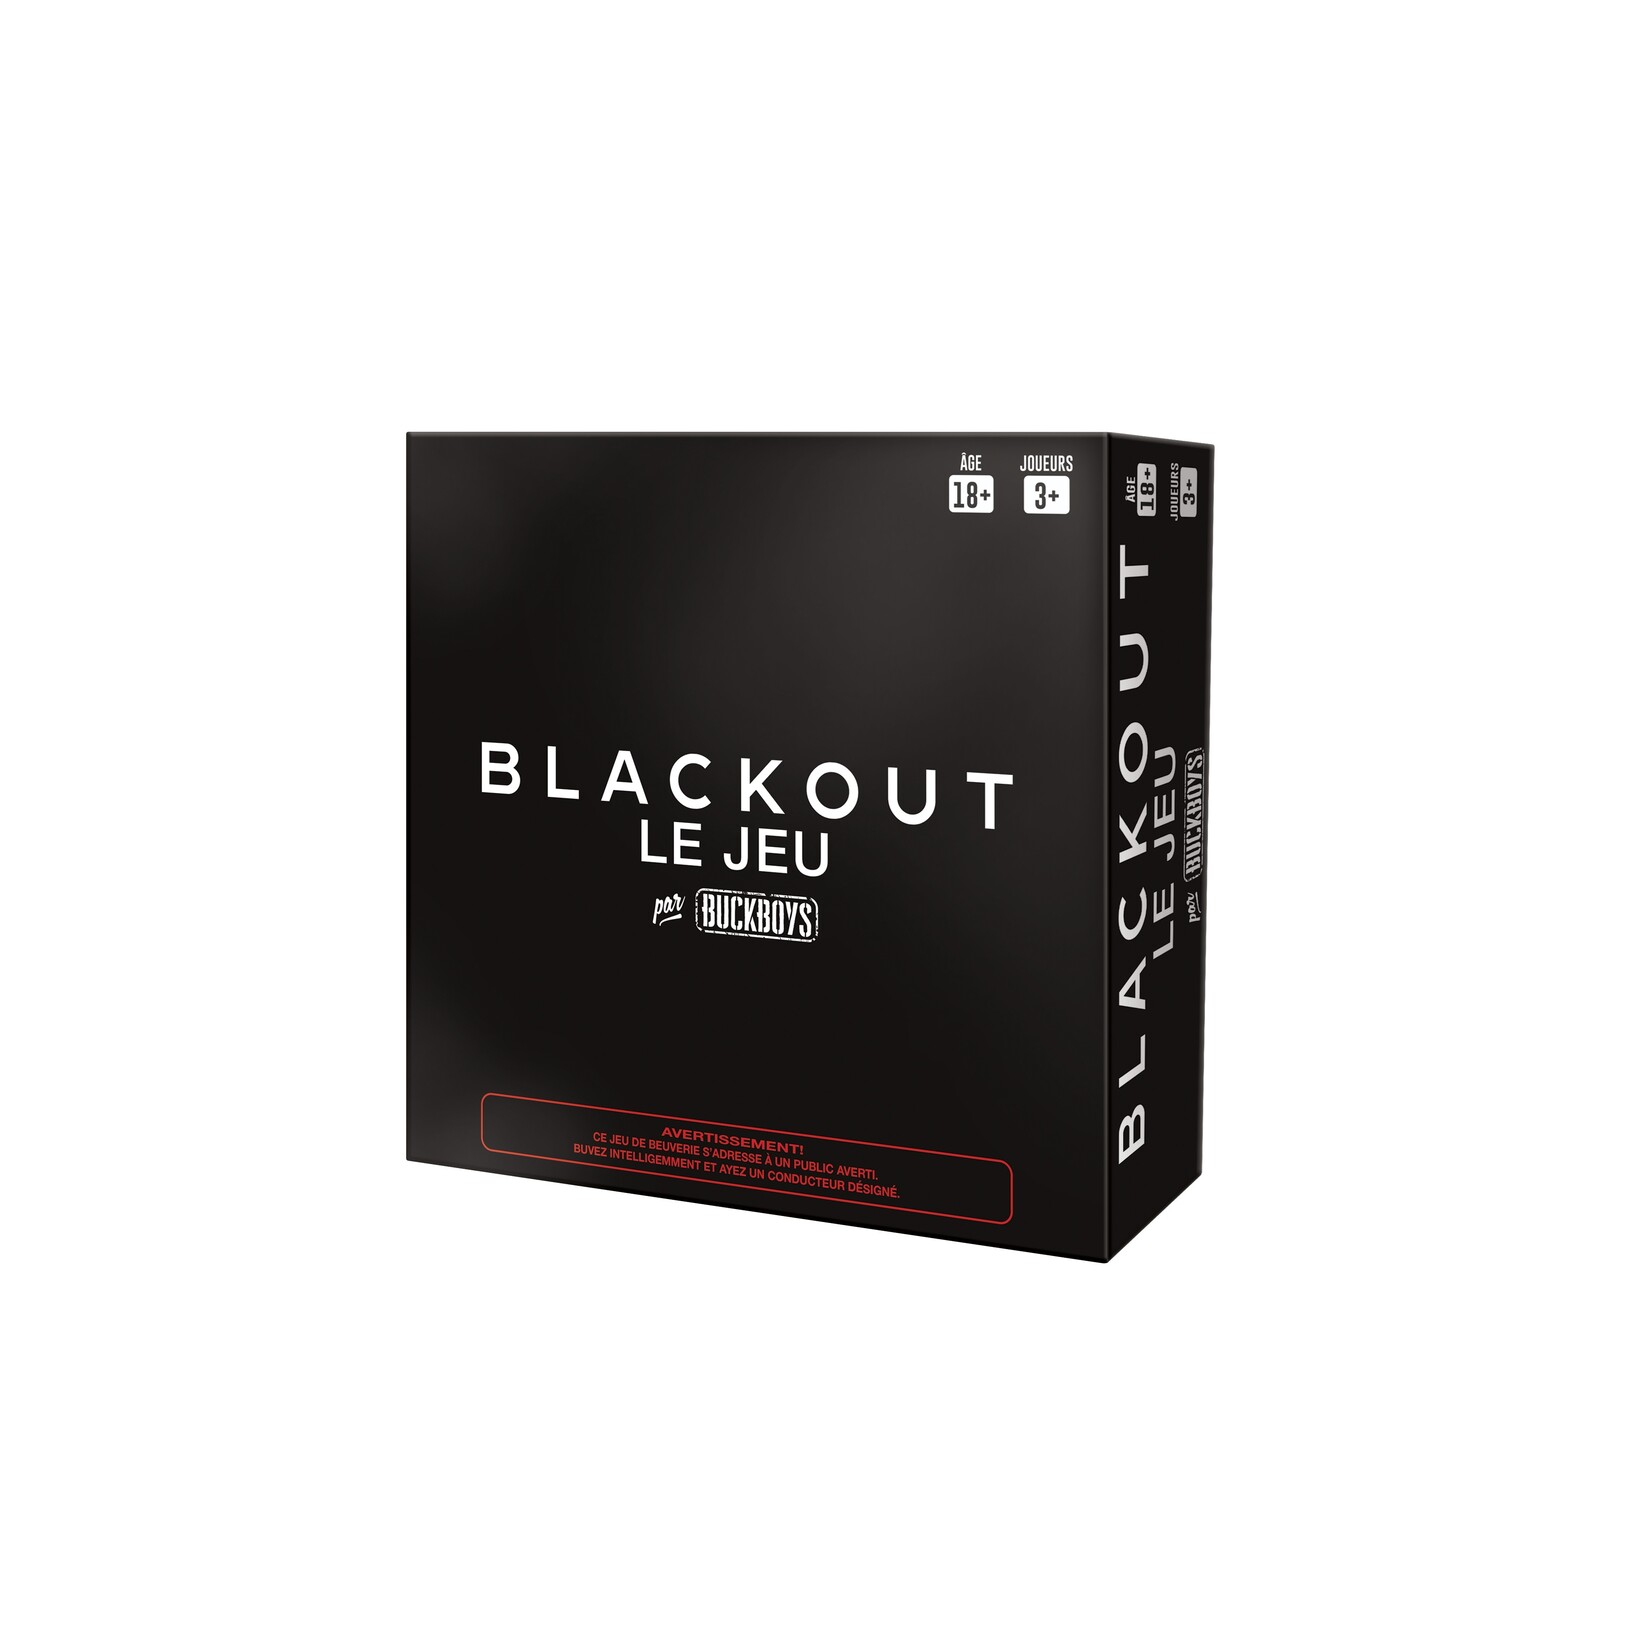 Blackout - Le jeu par Buckboys FR